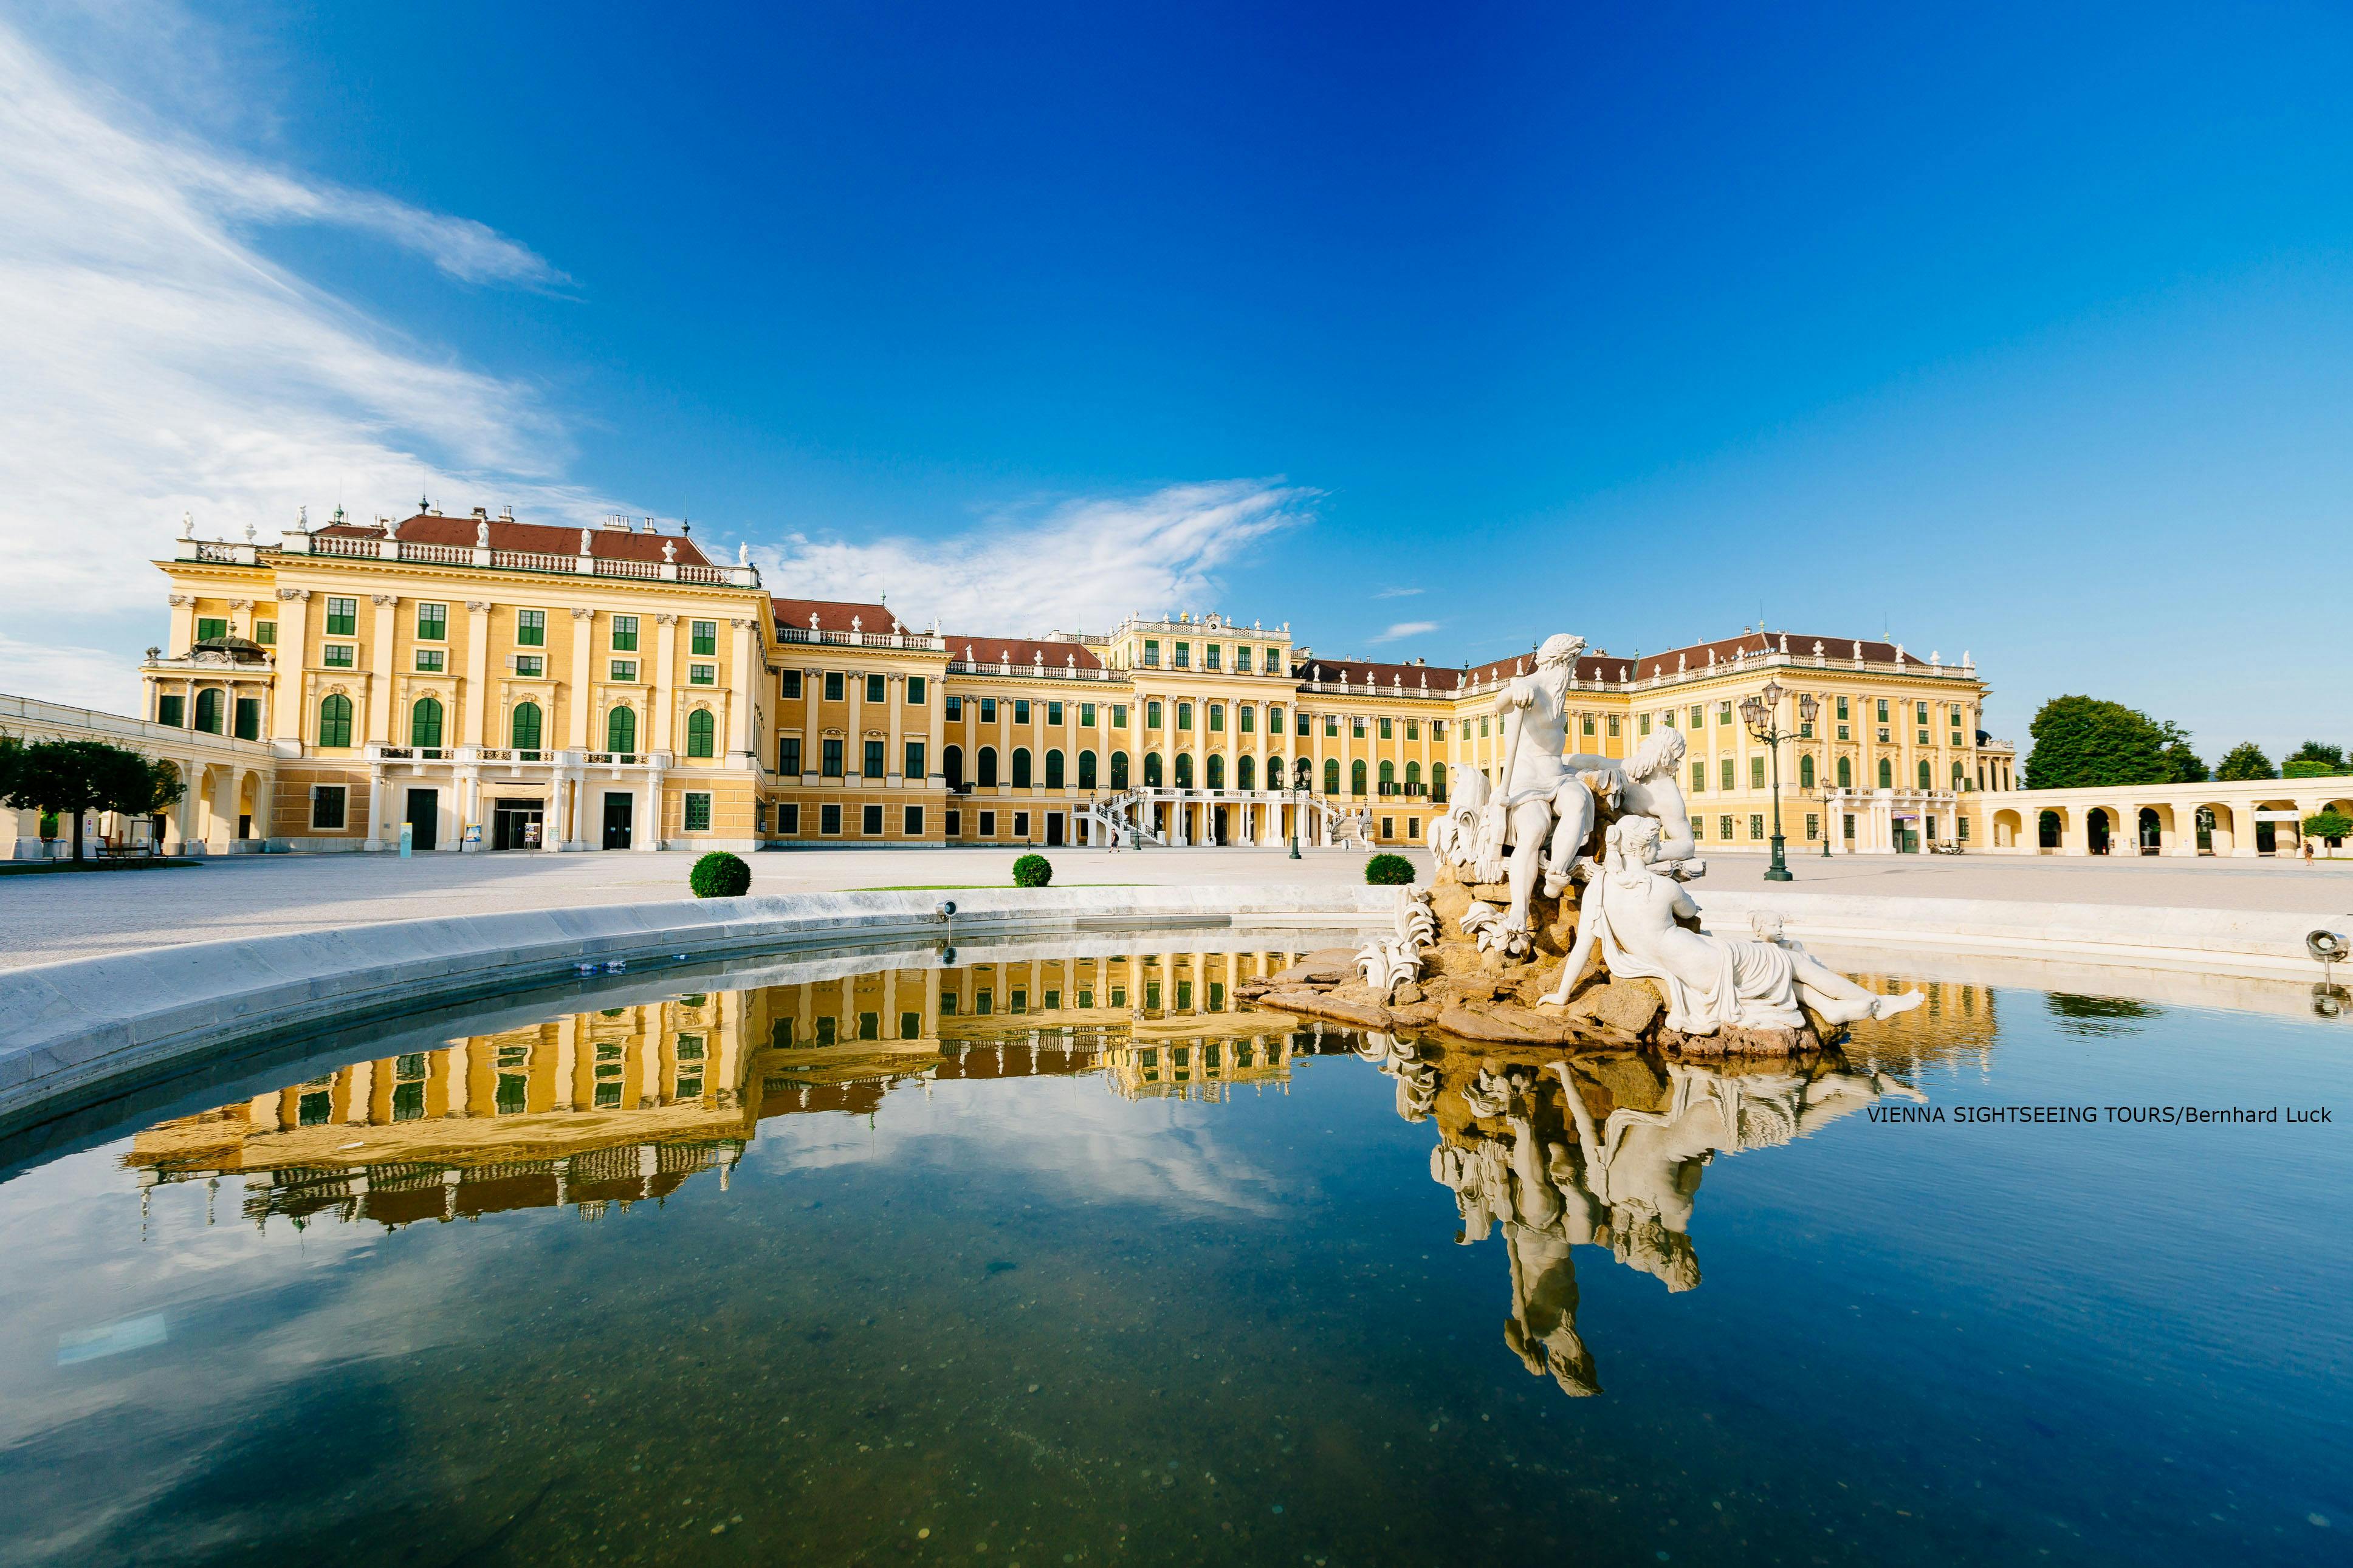 Forbi-køen-besøk til Schloss Schönbrunn og morgenomvisning i Wien